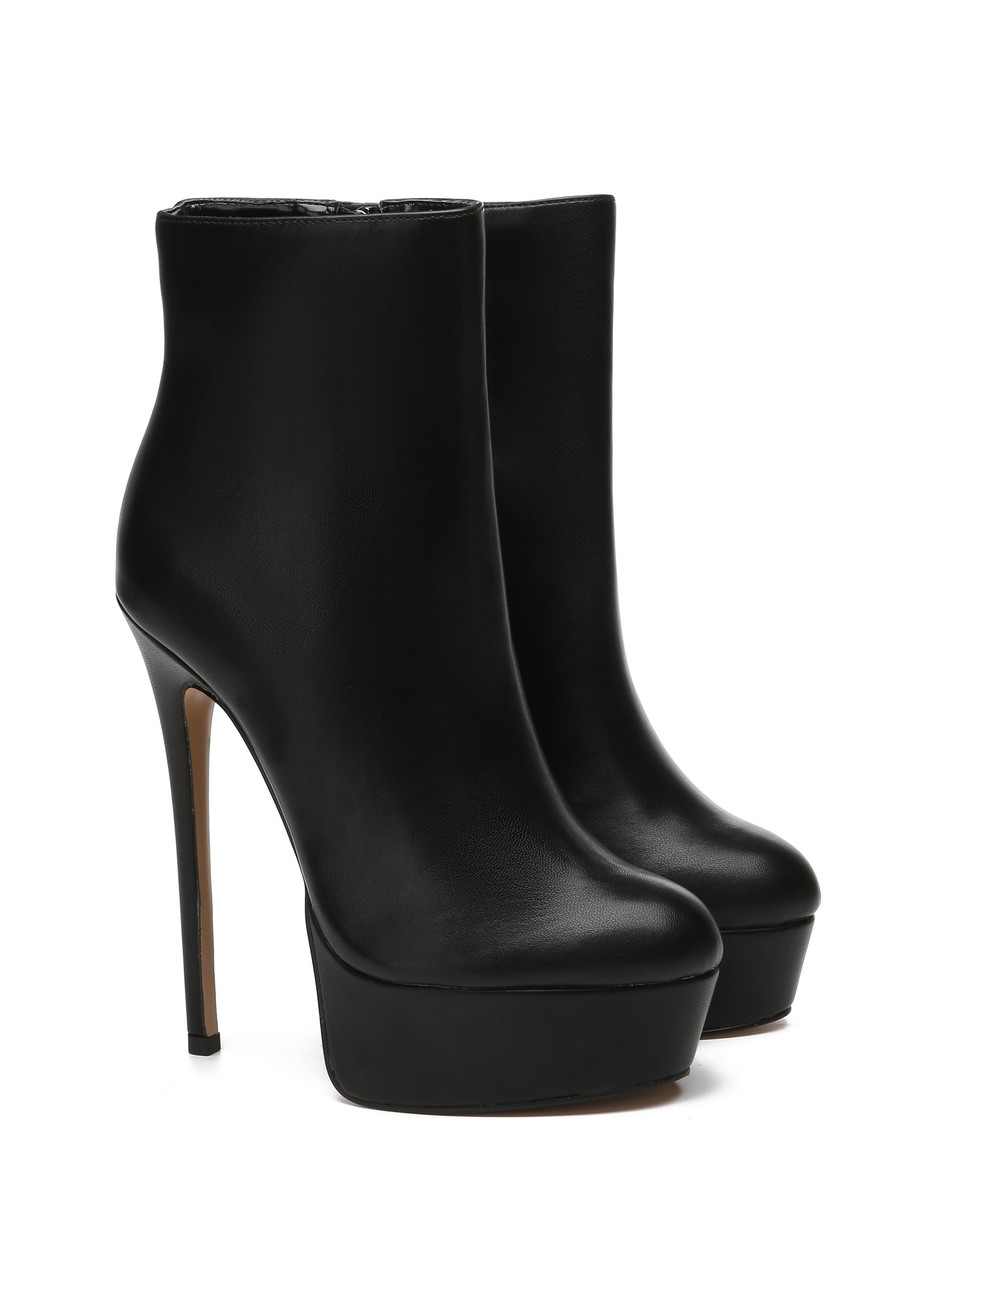 Giaro SIDDY BLACK MATTE ANKLE BOOTS - Shoebidoo Shoes | Giaro high heels